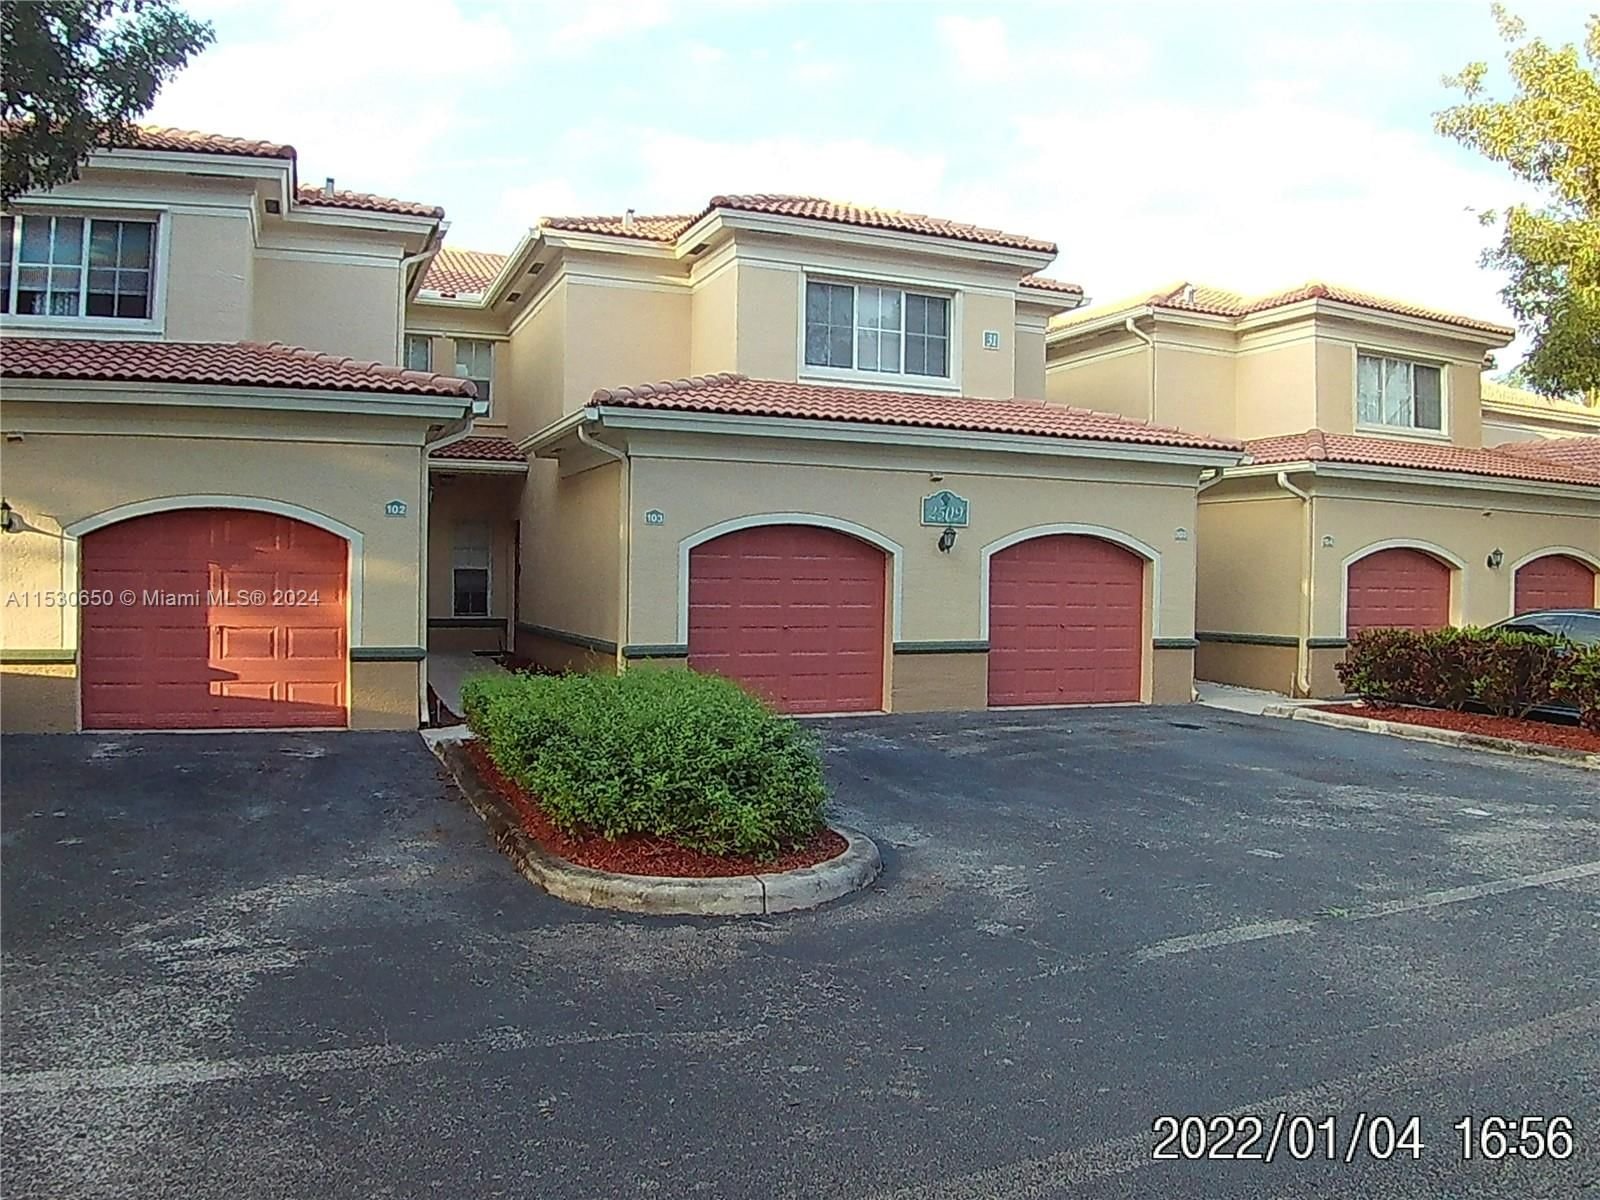 Real estate property located at 2509 Centergate Dr #103, Broward County, AVENTINE AT MIRAMAR CONDO, Miramar, FL